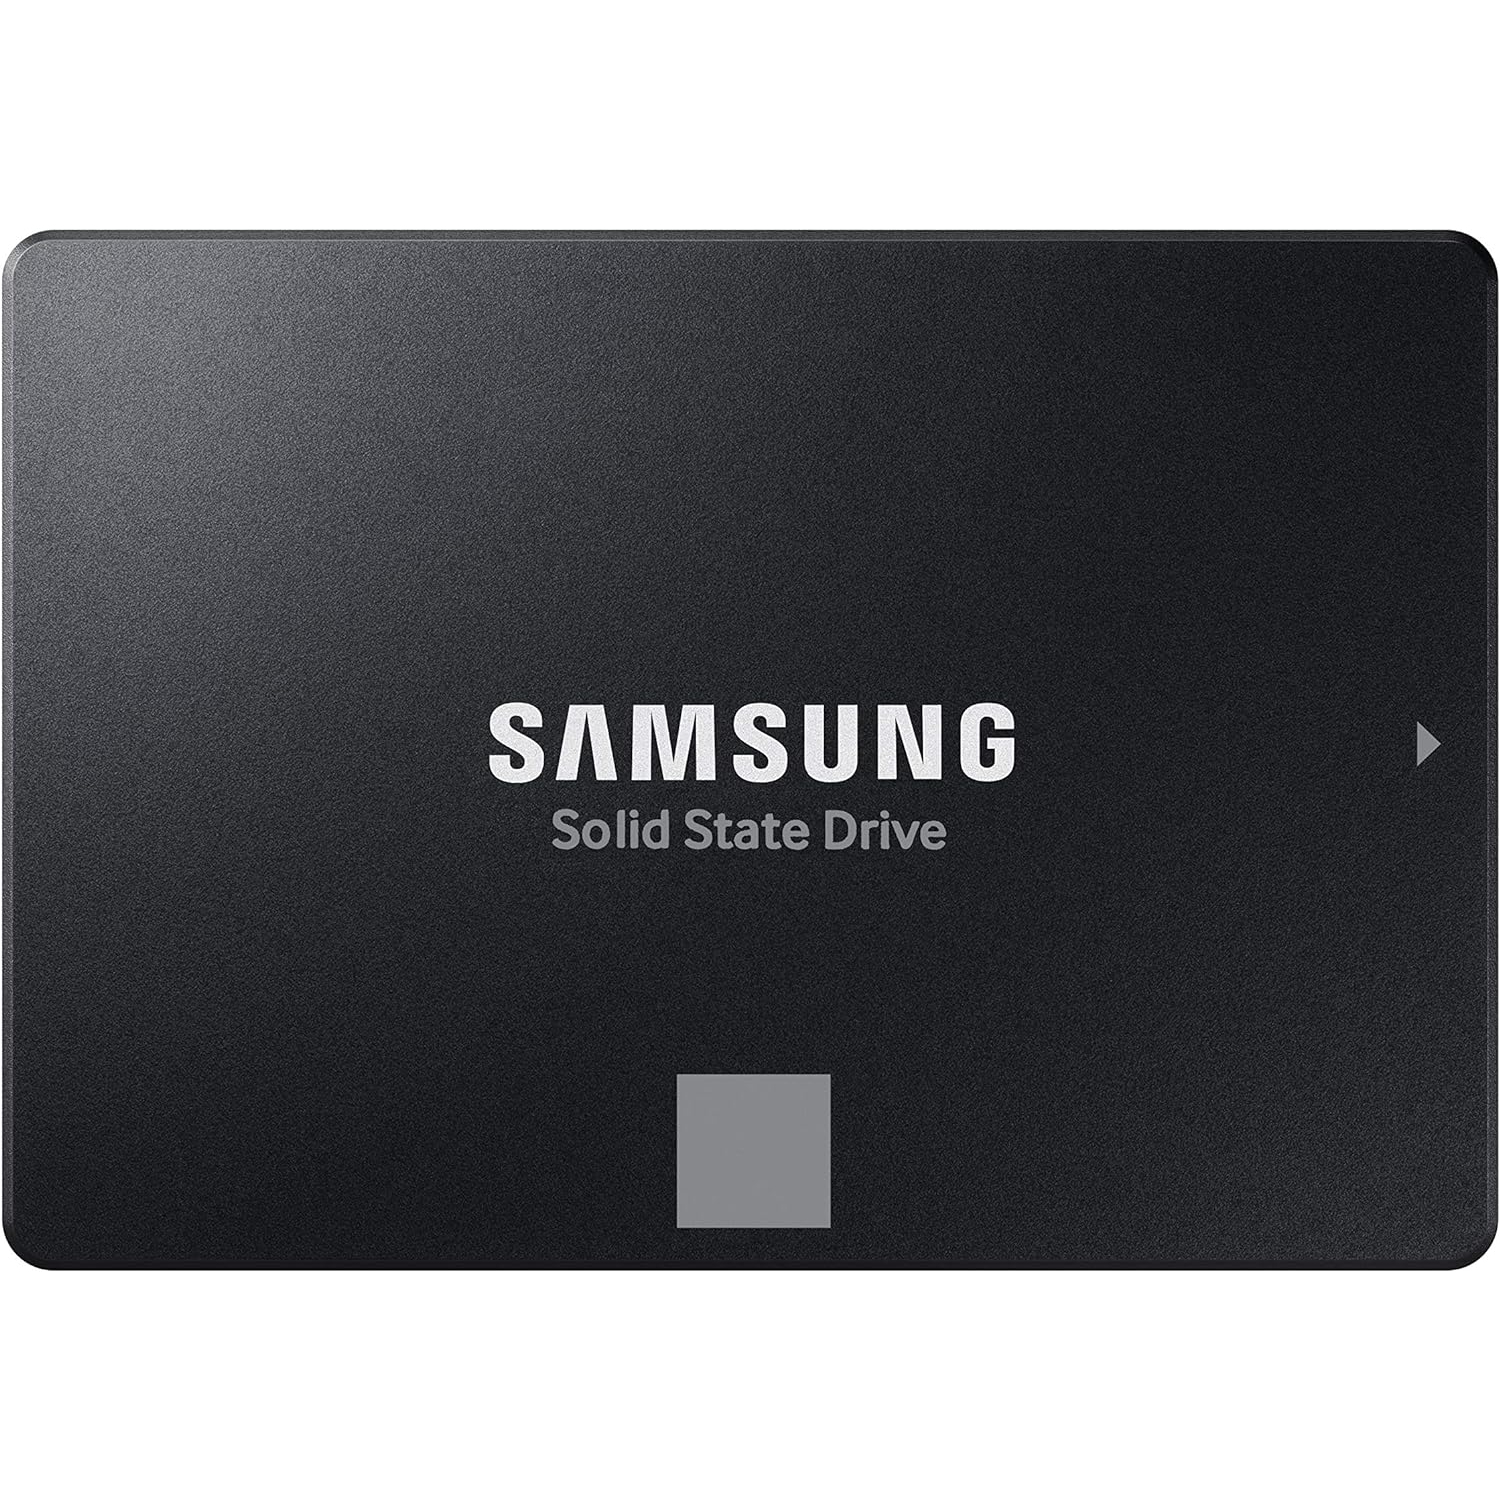 Refurbished ( Good ) Samsung 870 EVO-Series - 2TB SSD 2.5" - SATA III Internal Solid State Drive